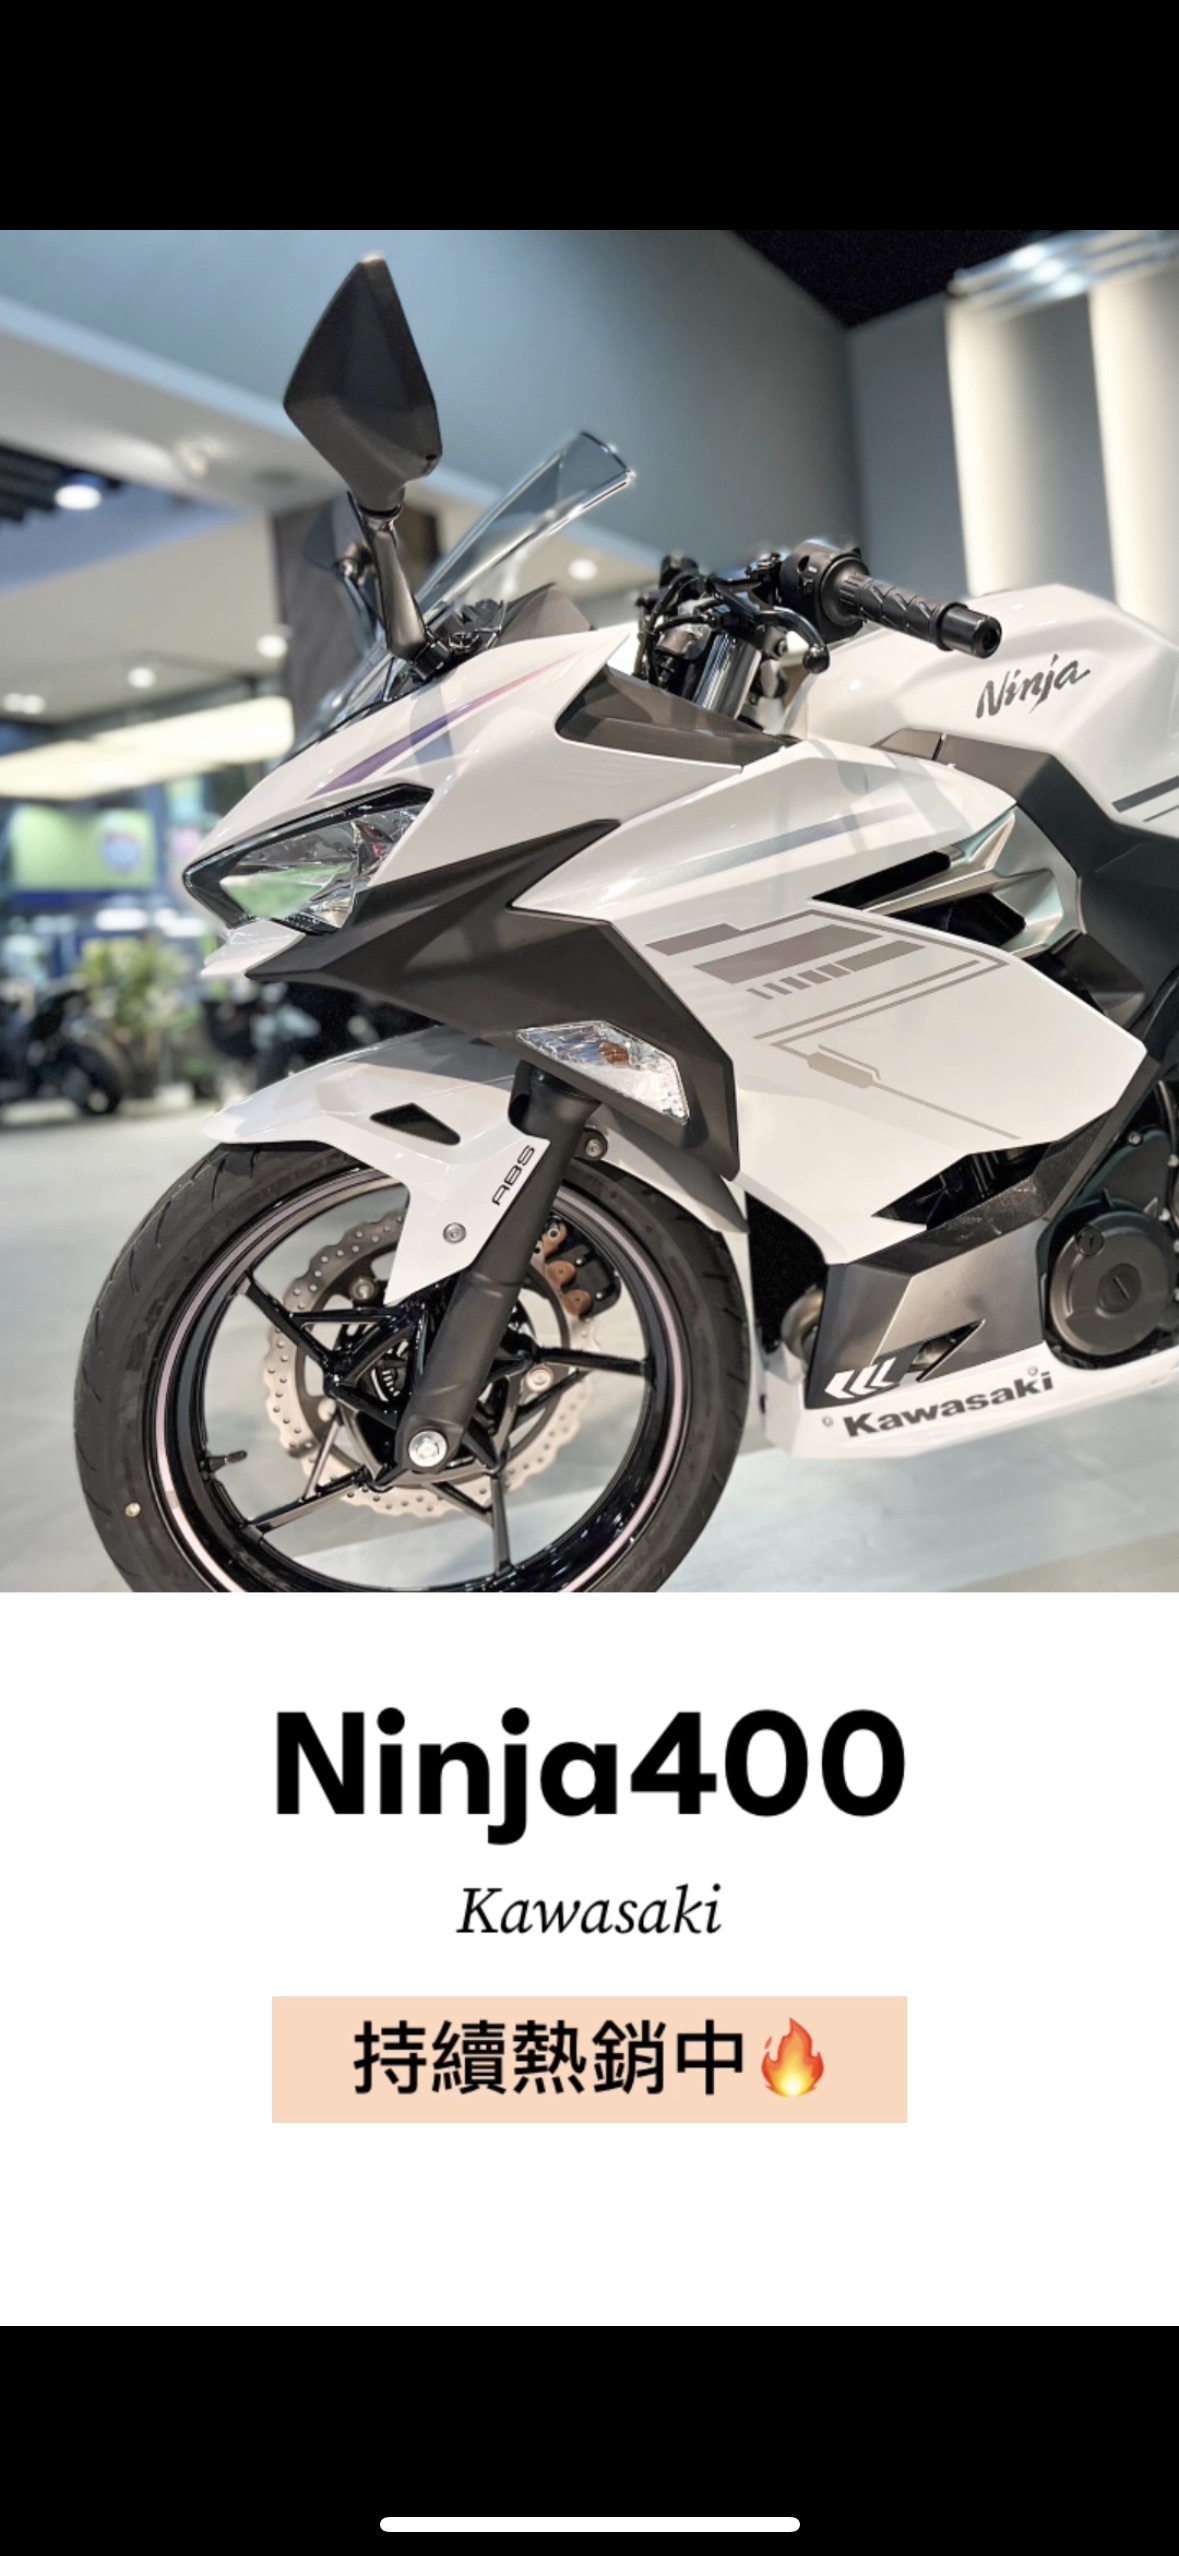 KAWASAKI NINJA400新車出售中 『敏傑康妮』川崎 Kawasaki 2023式樣 Ninja400 忍400 持續熱銷 全額零利率優惠實施中(指定車色) | 敏傑車業資深銷售專員 康妮 Connie